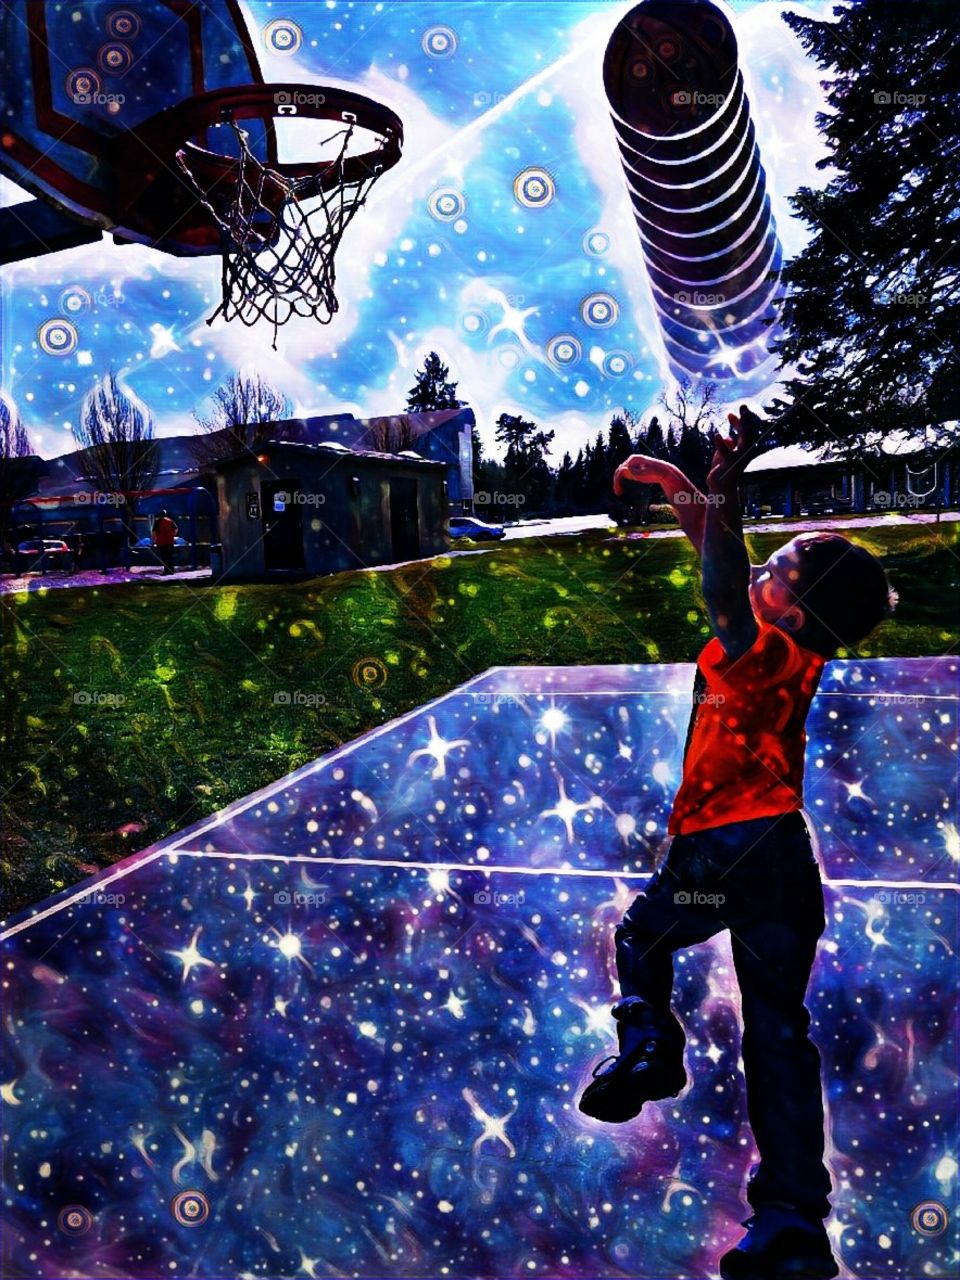 Galaxy themed abstract of boy in orange shirt, shooting basketball.